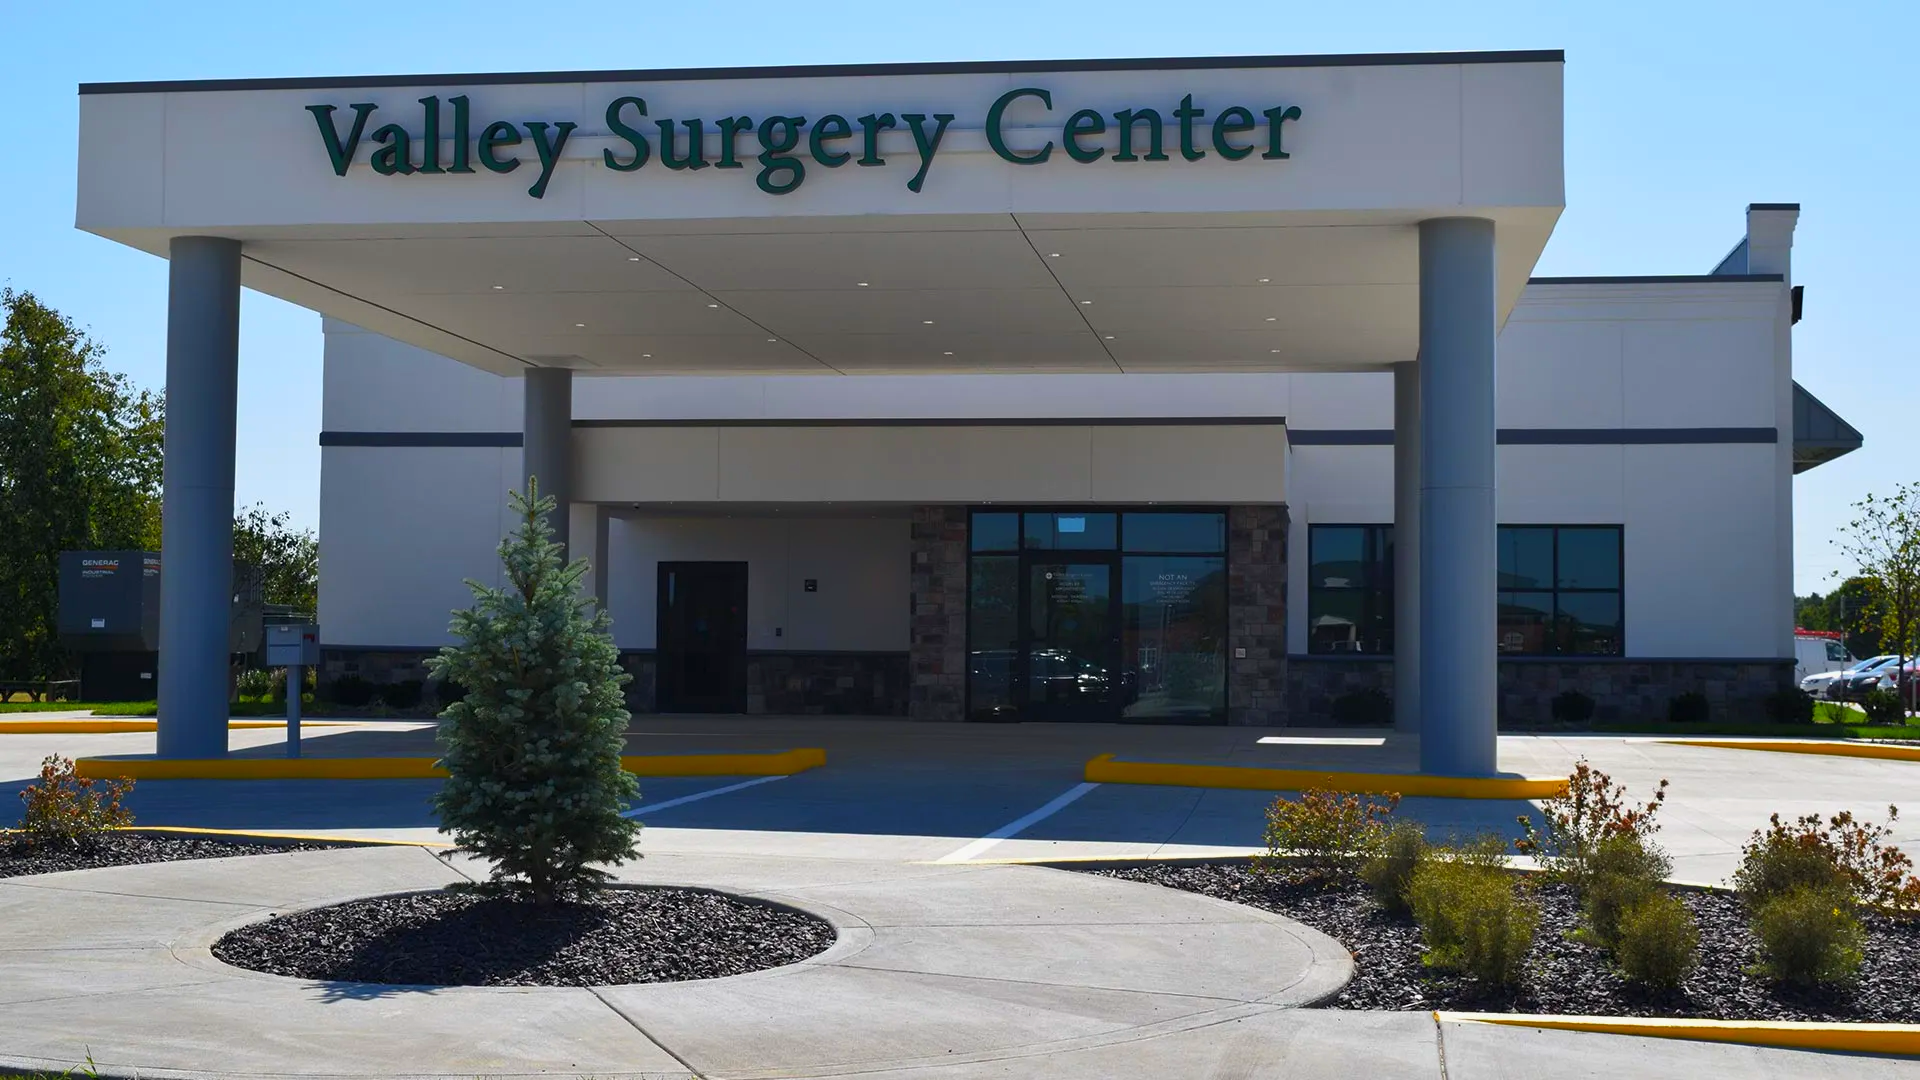 valley surgery center building